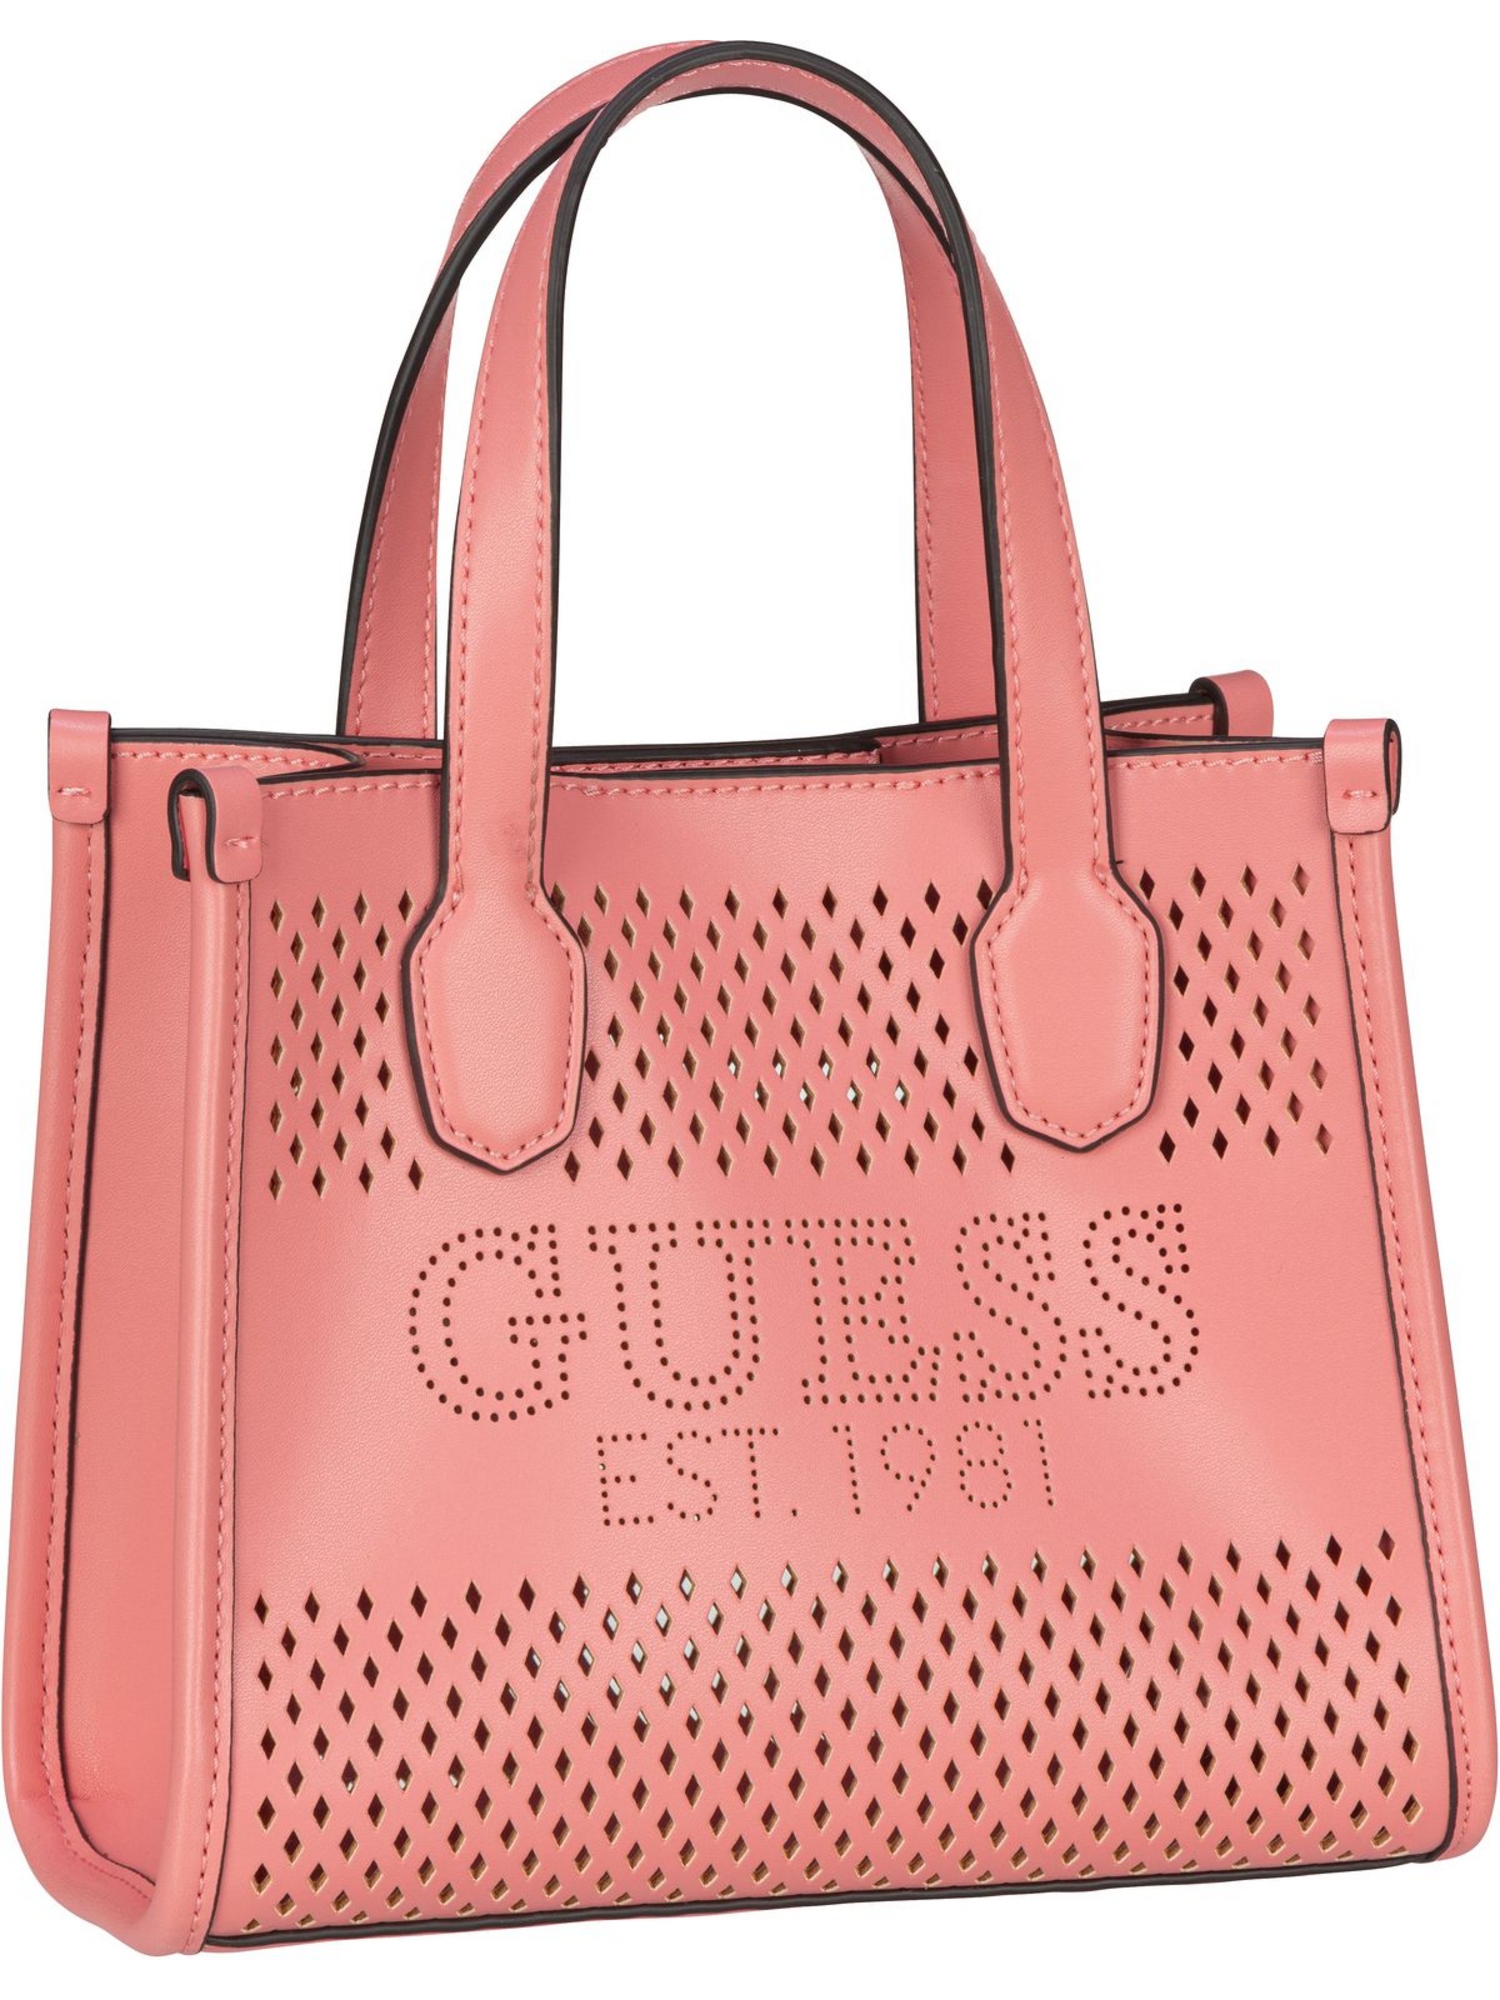 Сумка Guess Handtasche Katey Mini Tote WH, розовый сумка сэтчел guess katey stampa cocco кремовый